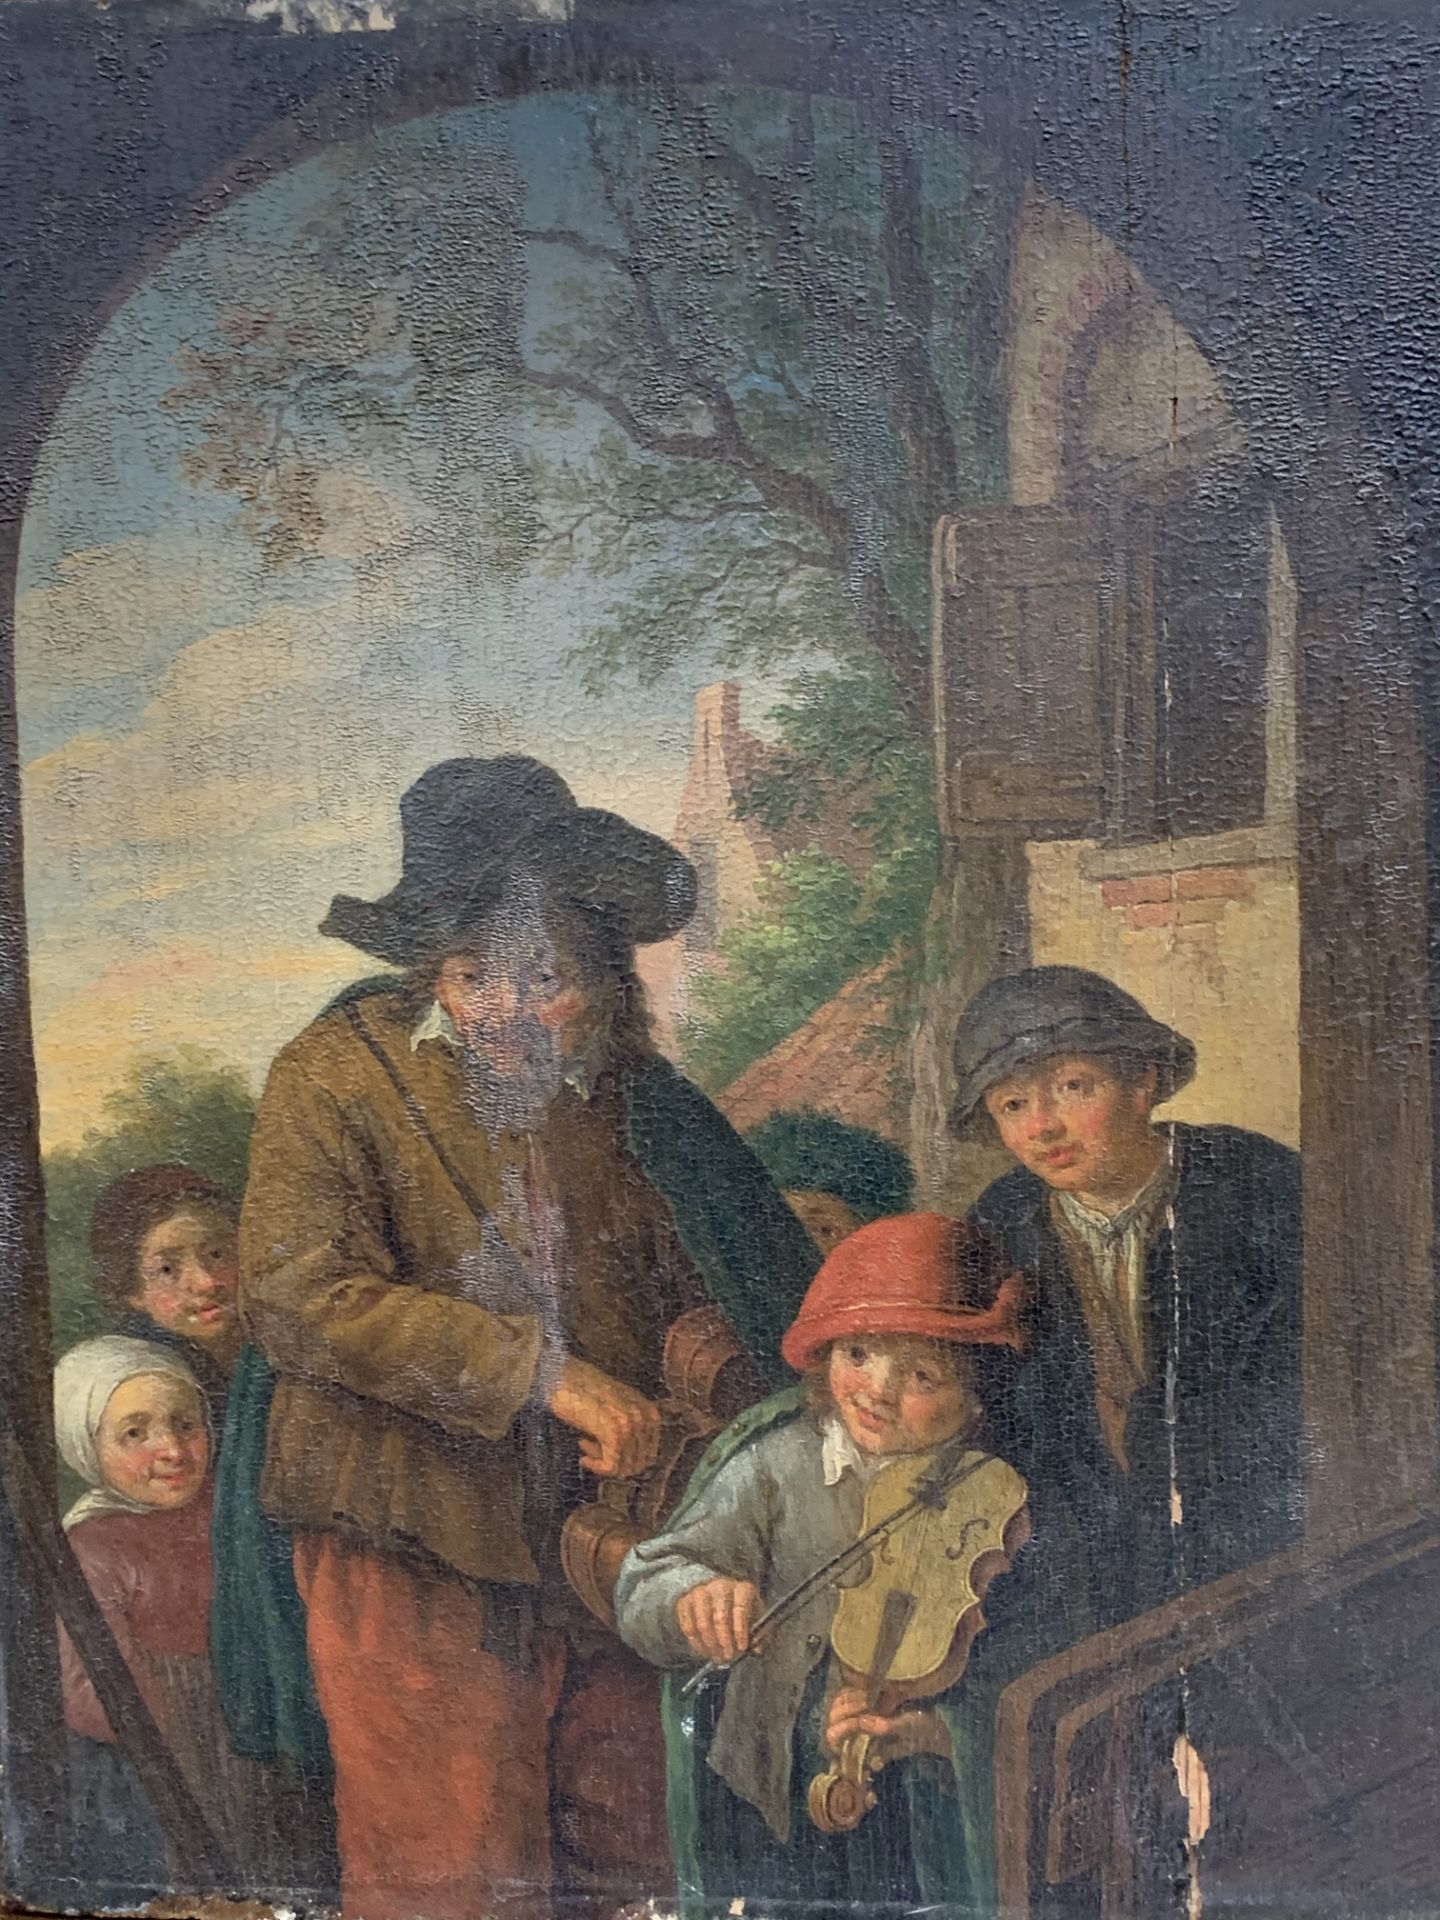 Framed oil on board in the manner of 17th Century Dutch school, possibly Adriane Van Ostade.